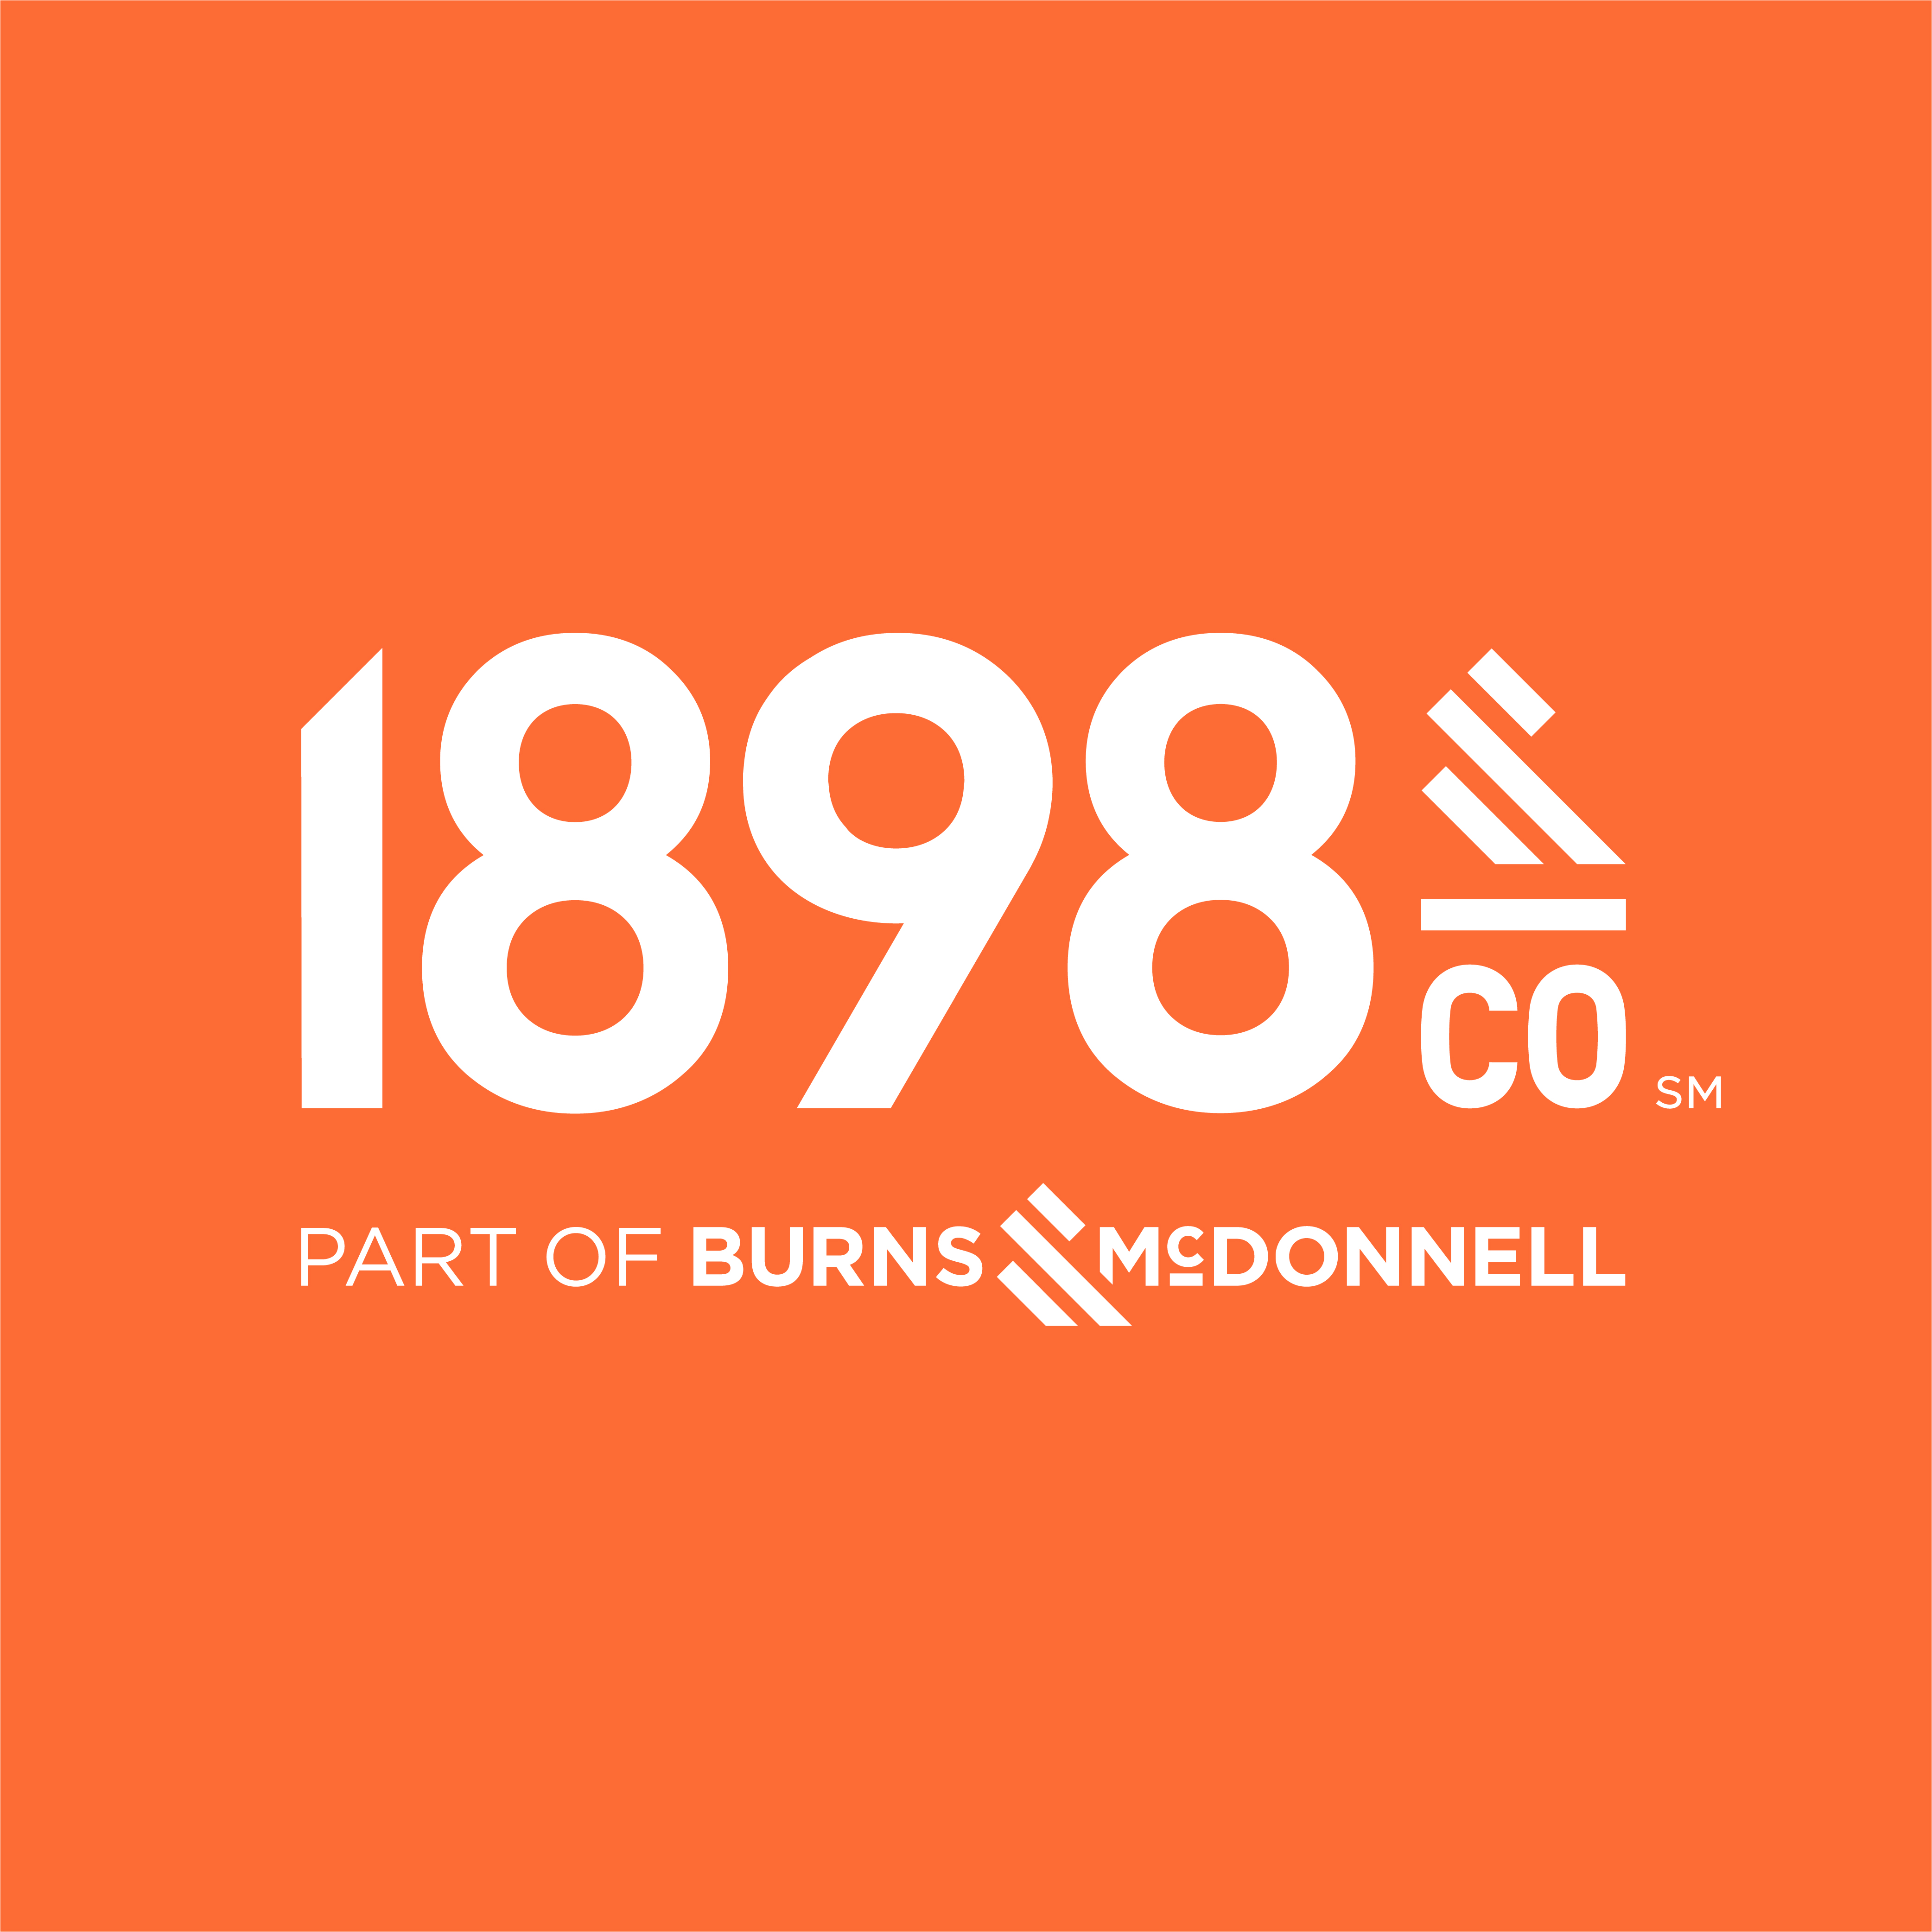 1898 logo Final 002